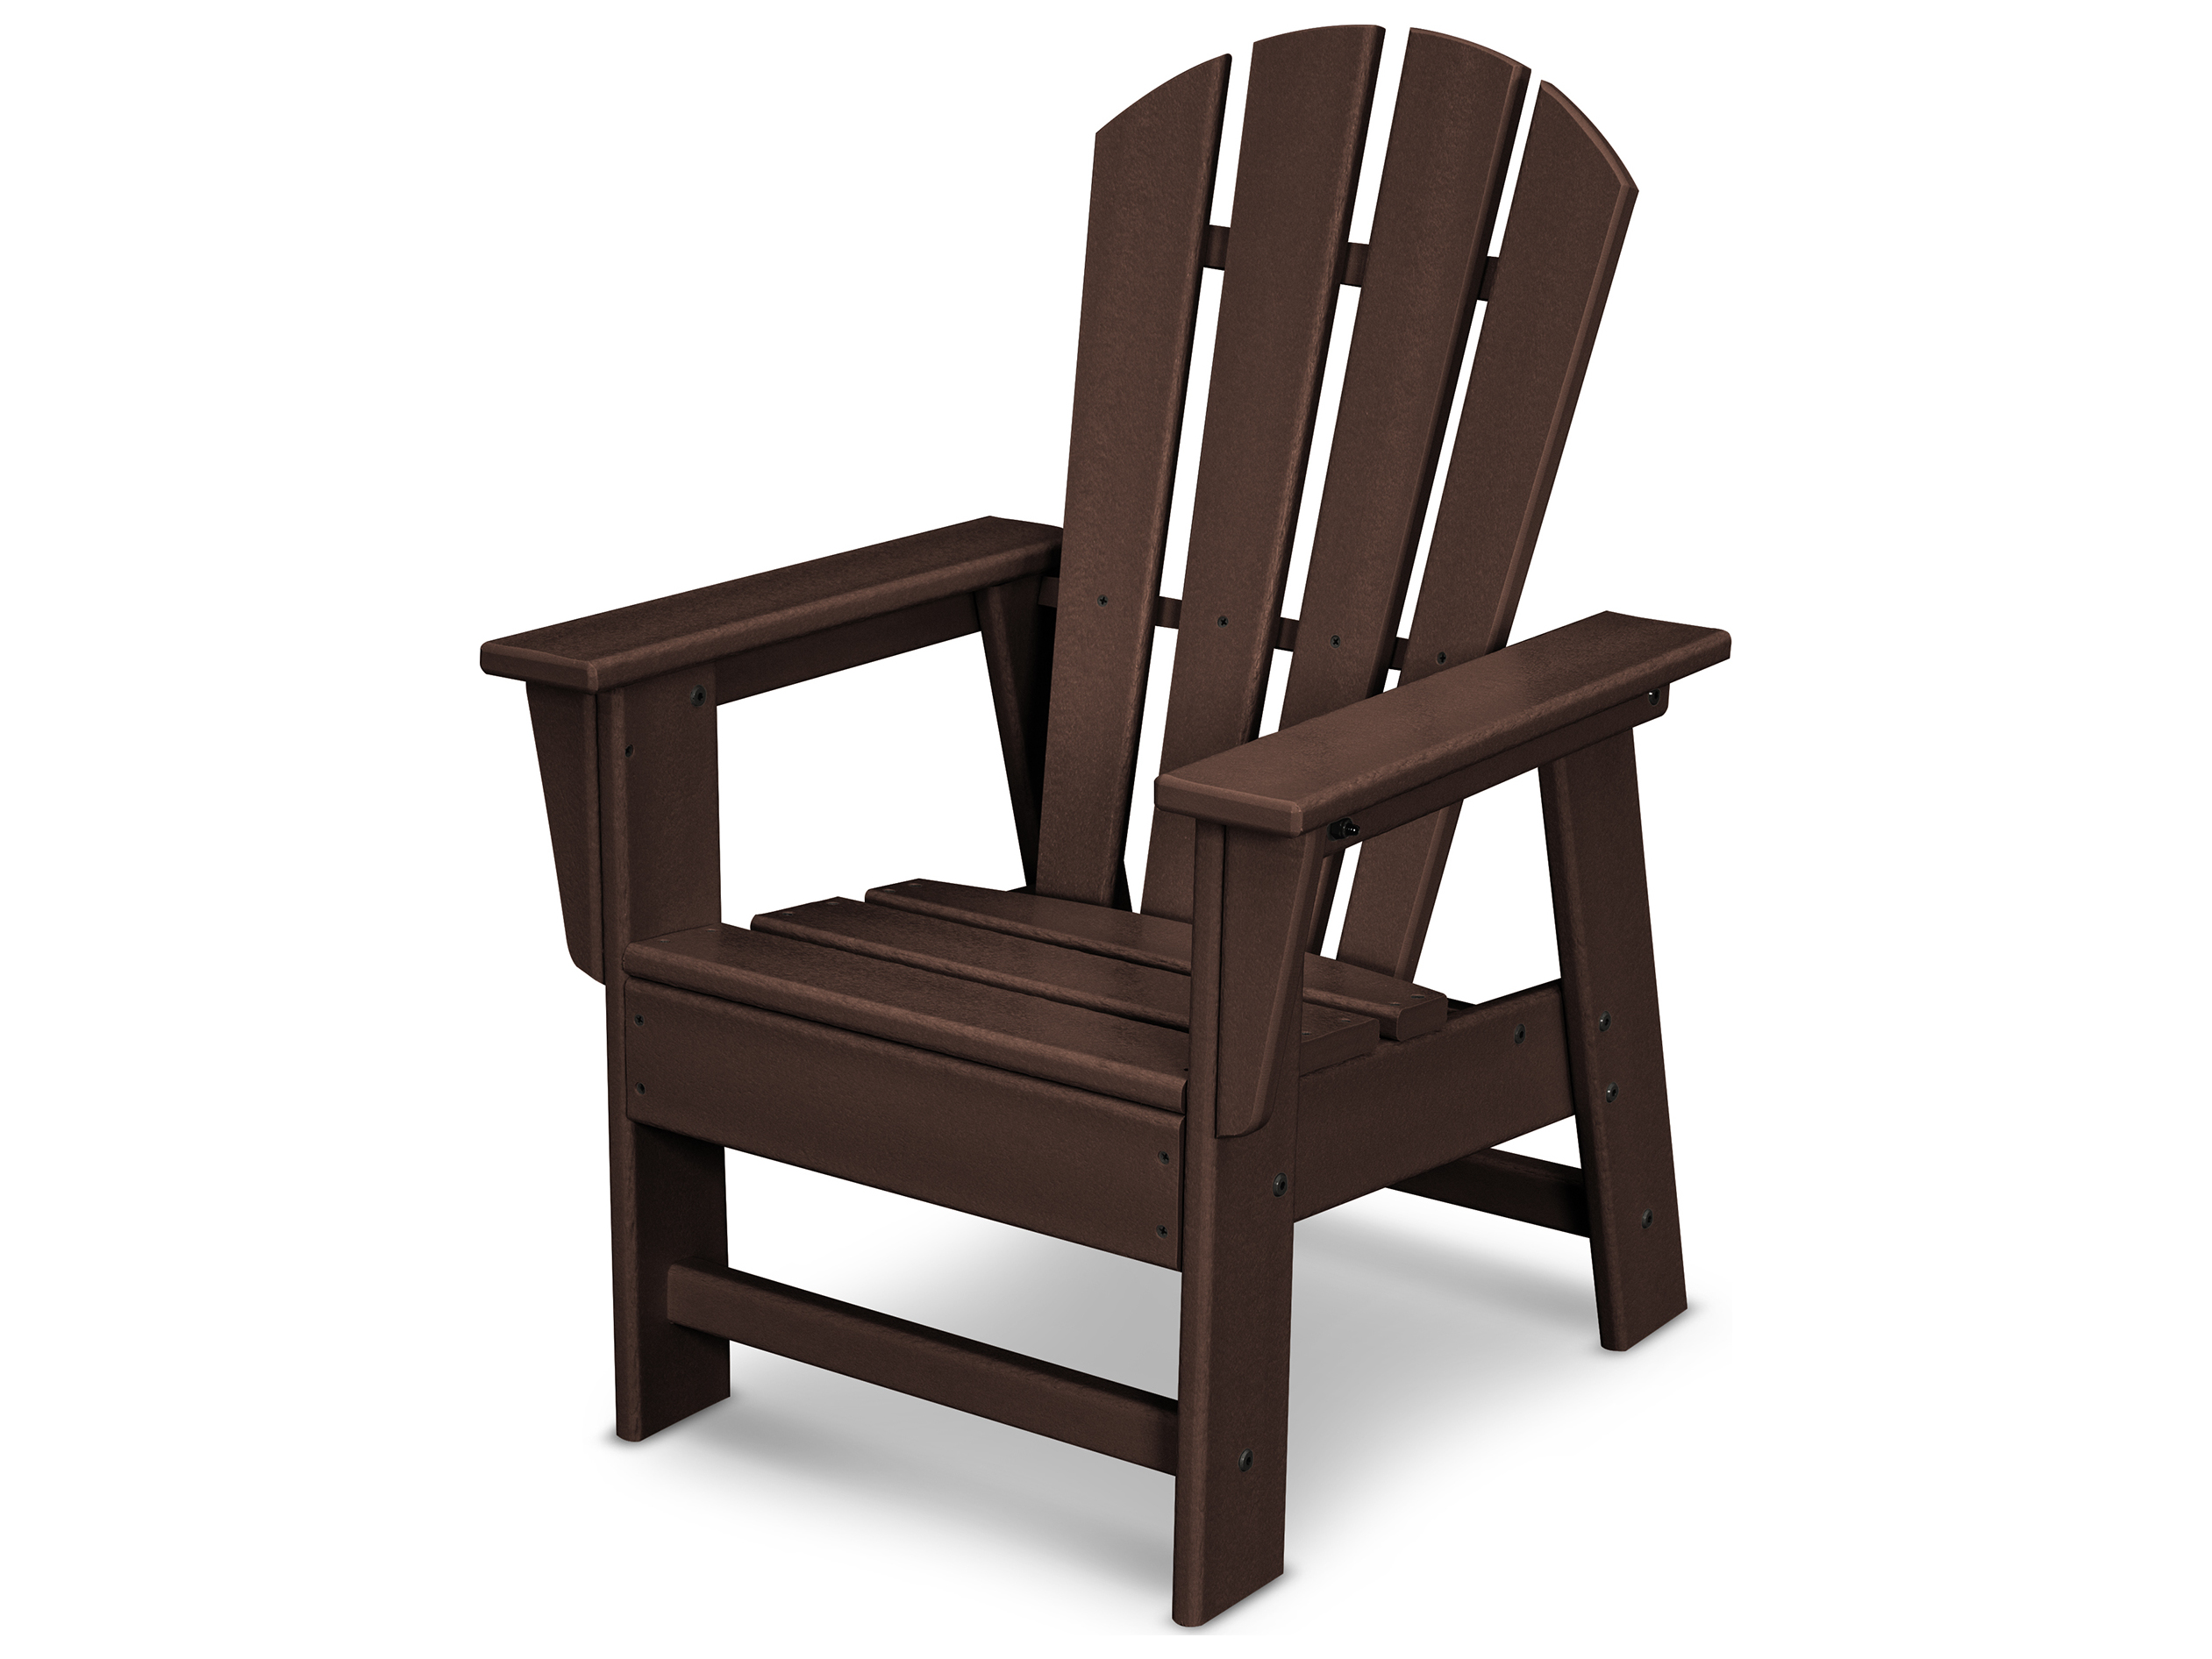 Cheap Plastic Adirondack Chairs / Merry Products Plastic Wood Folding